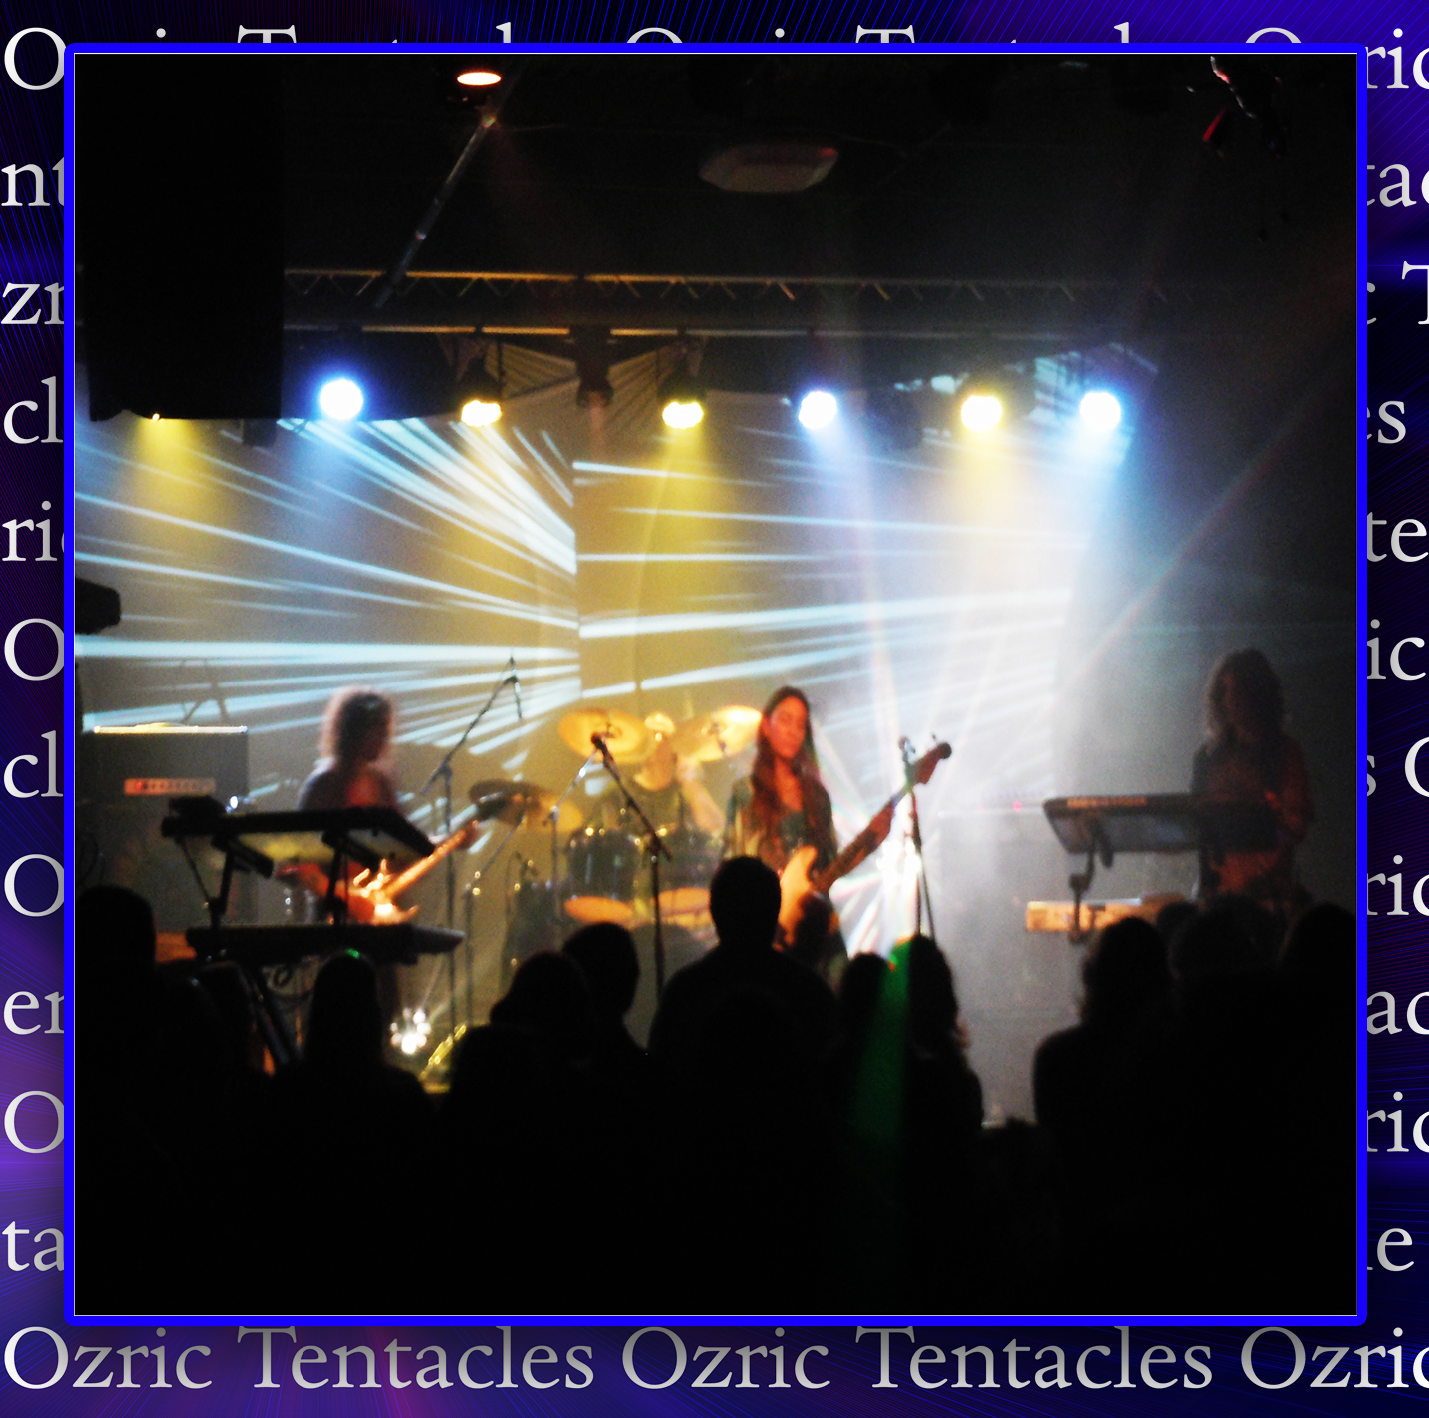 OzricTentacles2012-5-13HareAndHoundsBirminghamUK (7).png